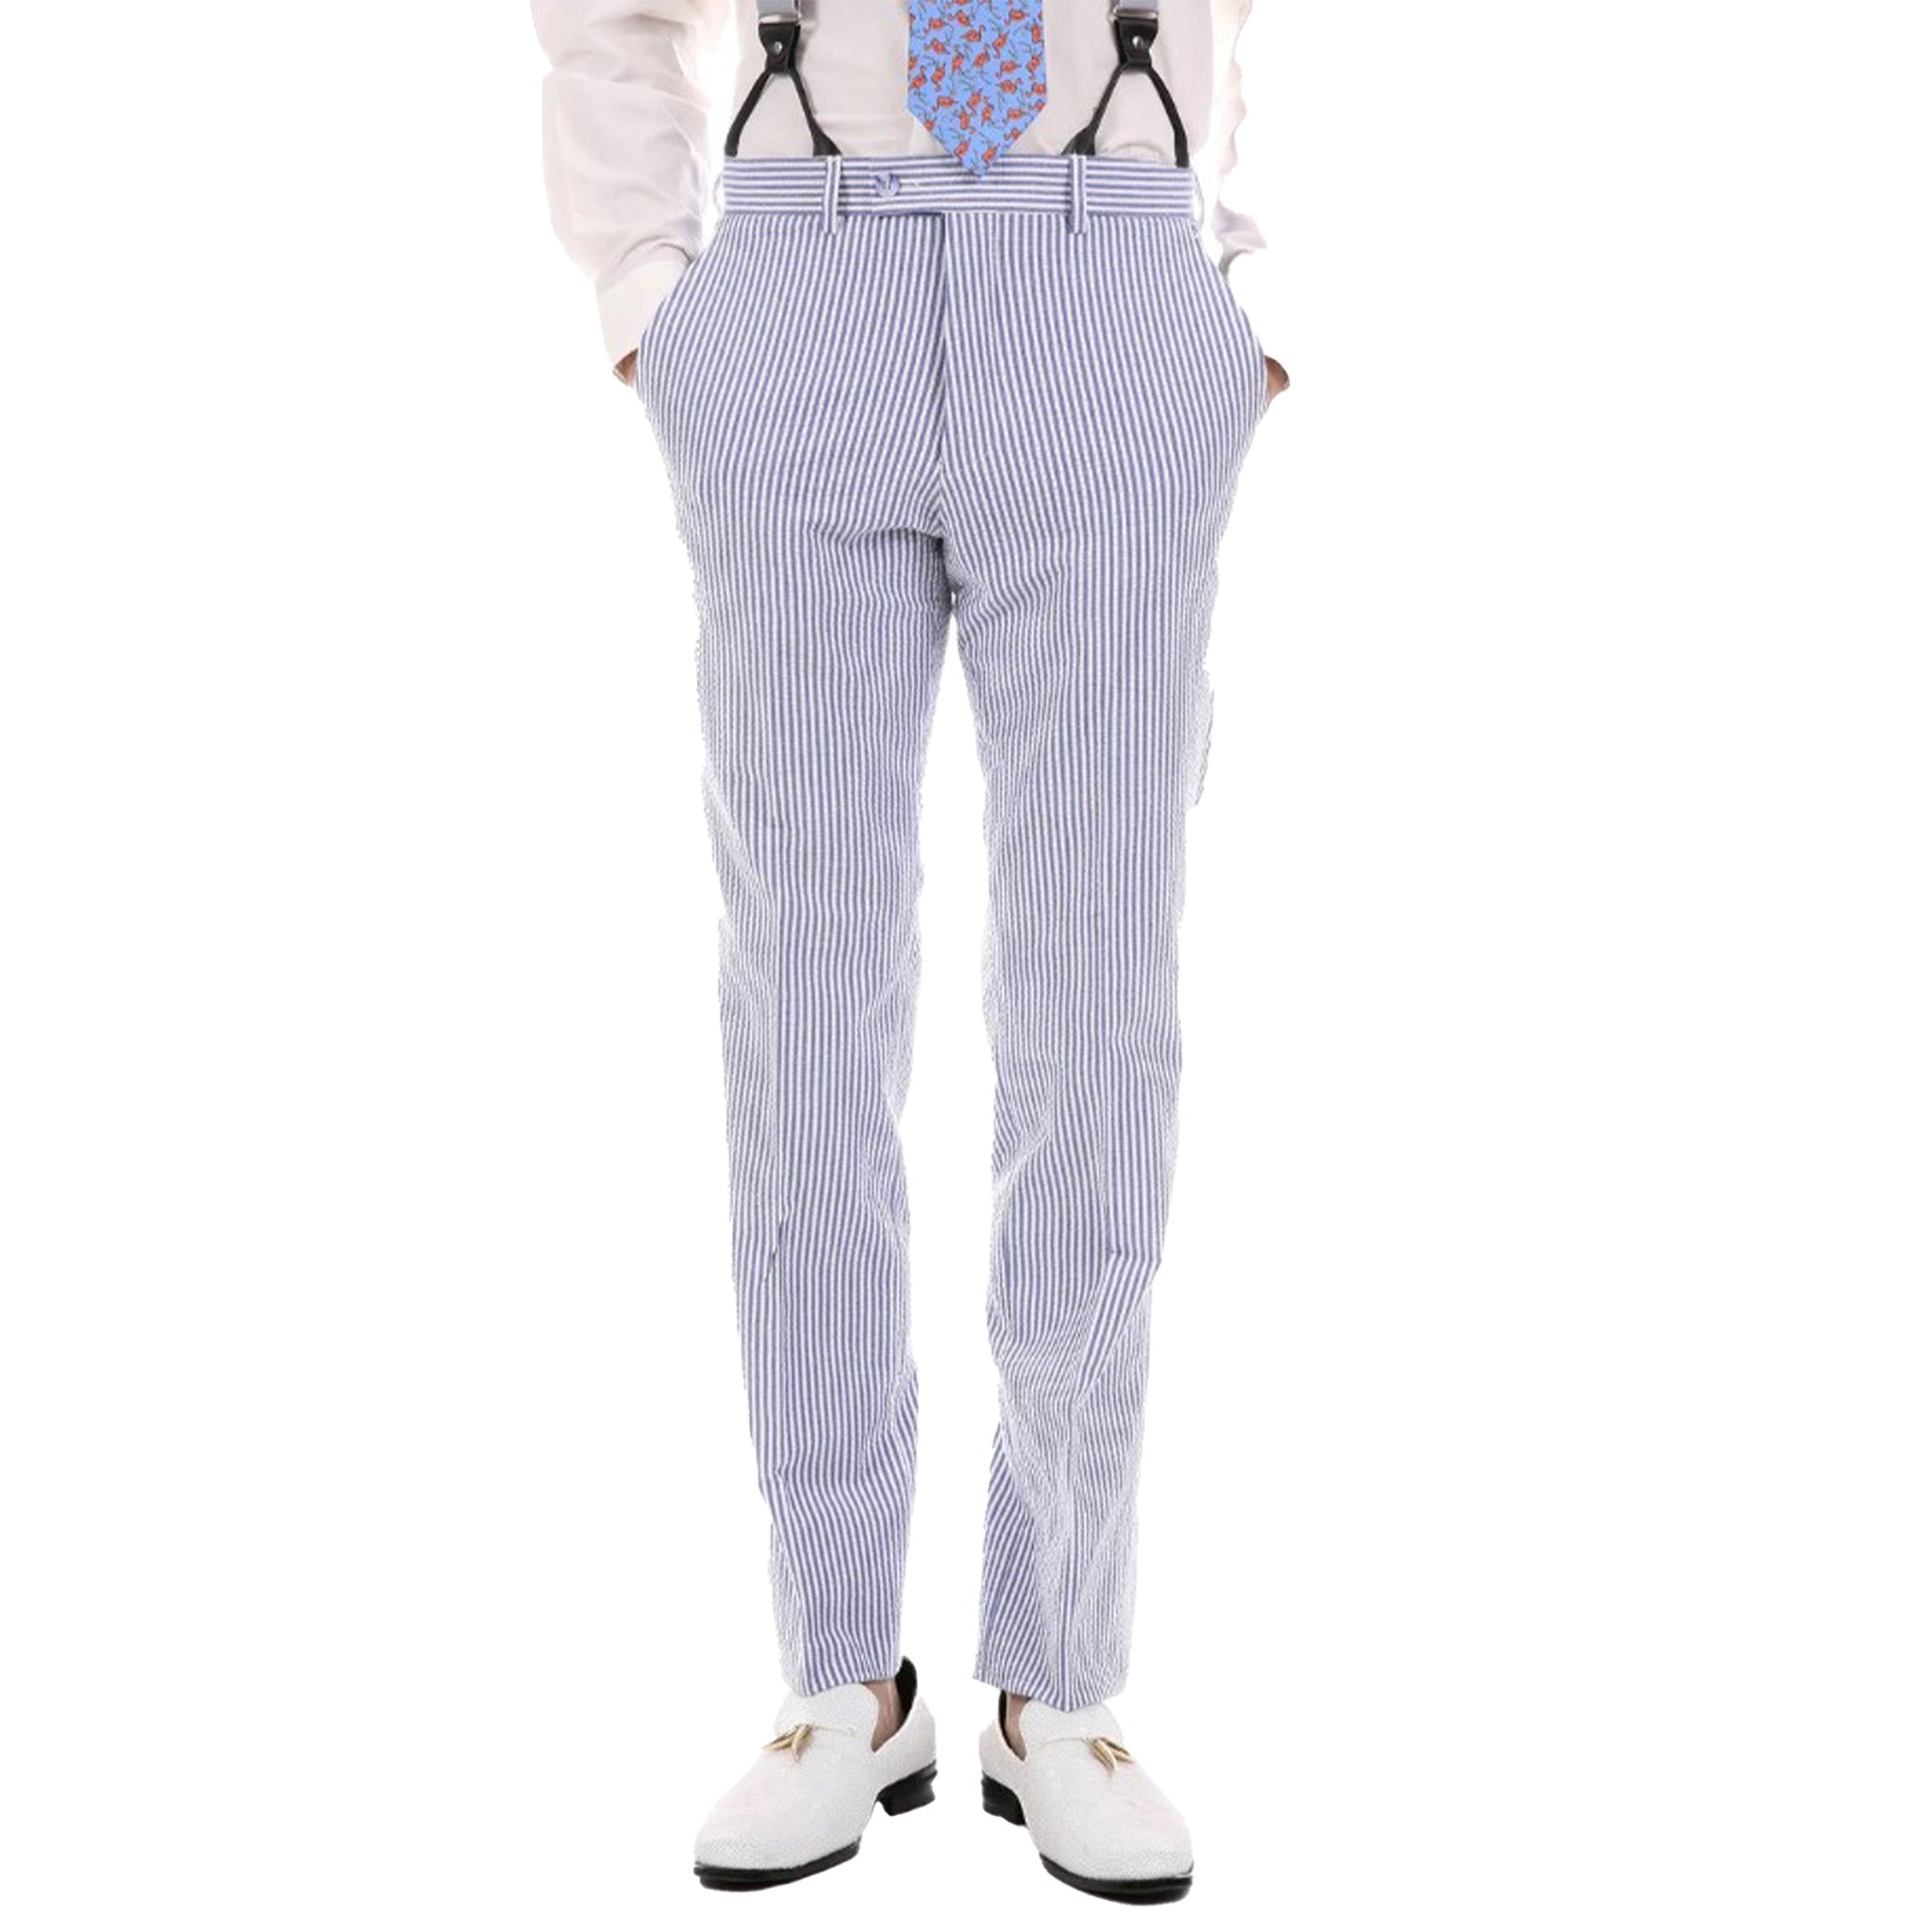 Slim Fit Blue Seersucker Suit